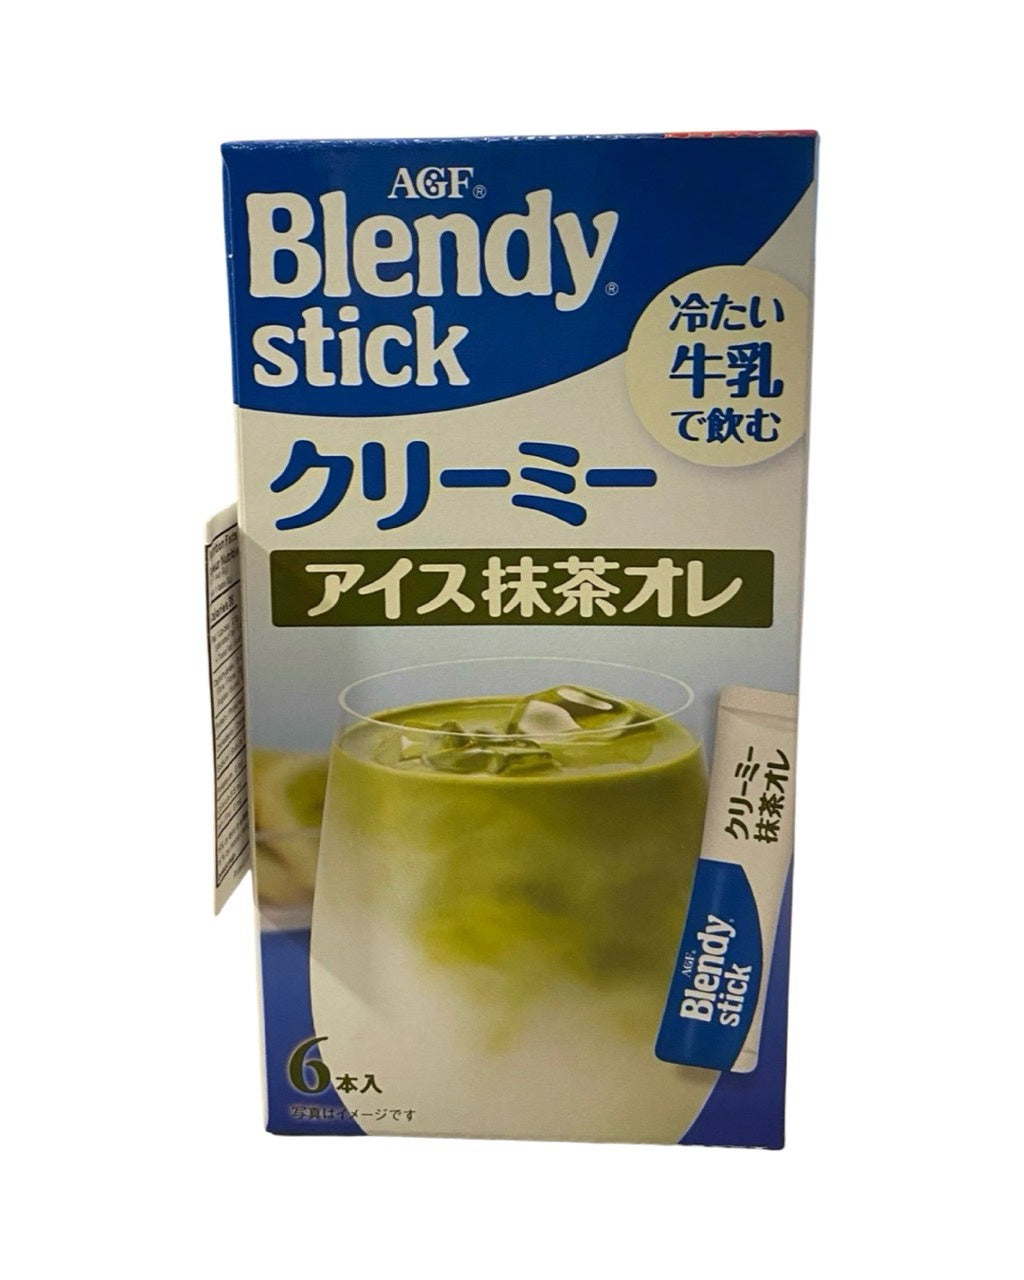 AGF - BLENDY STICK CREAMY ICED MATCHA 6P